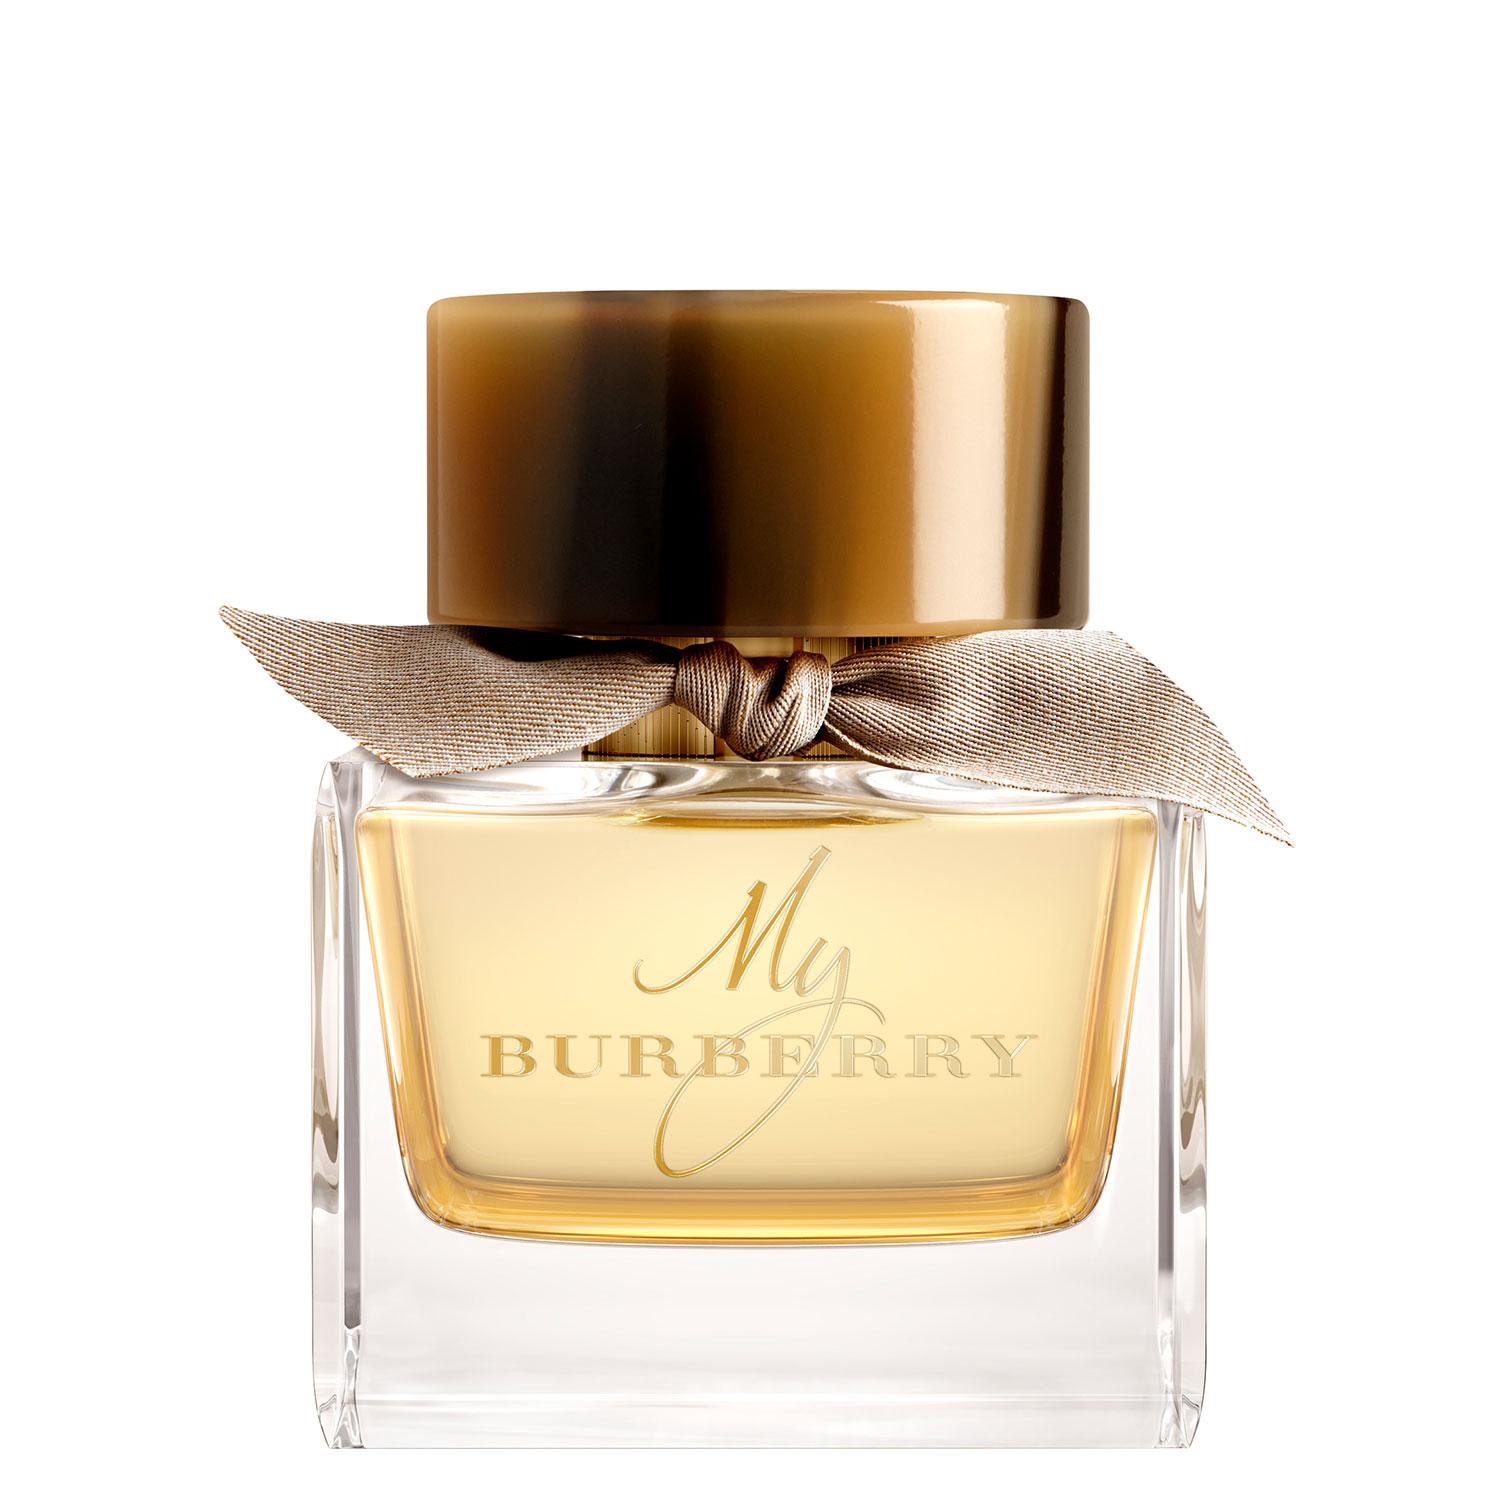 My Burberry - Eau de Parfum